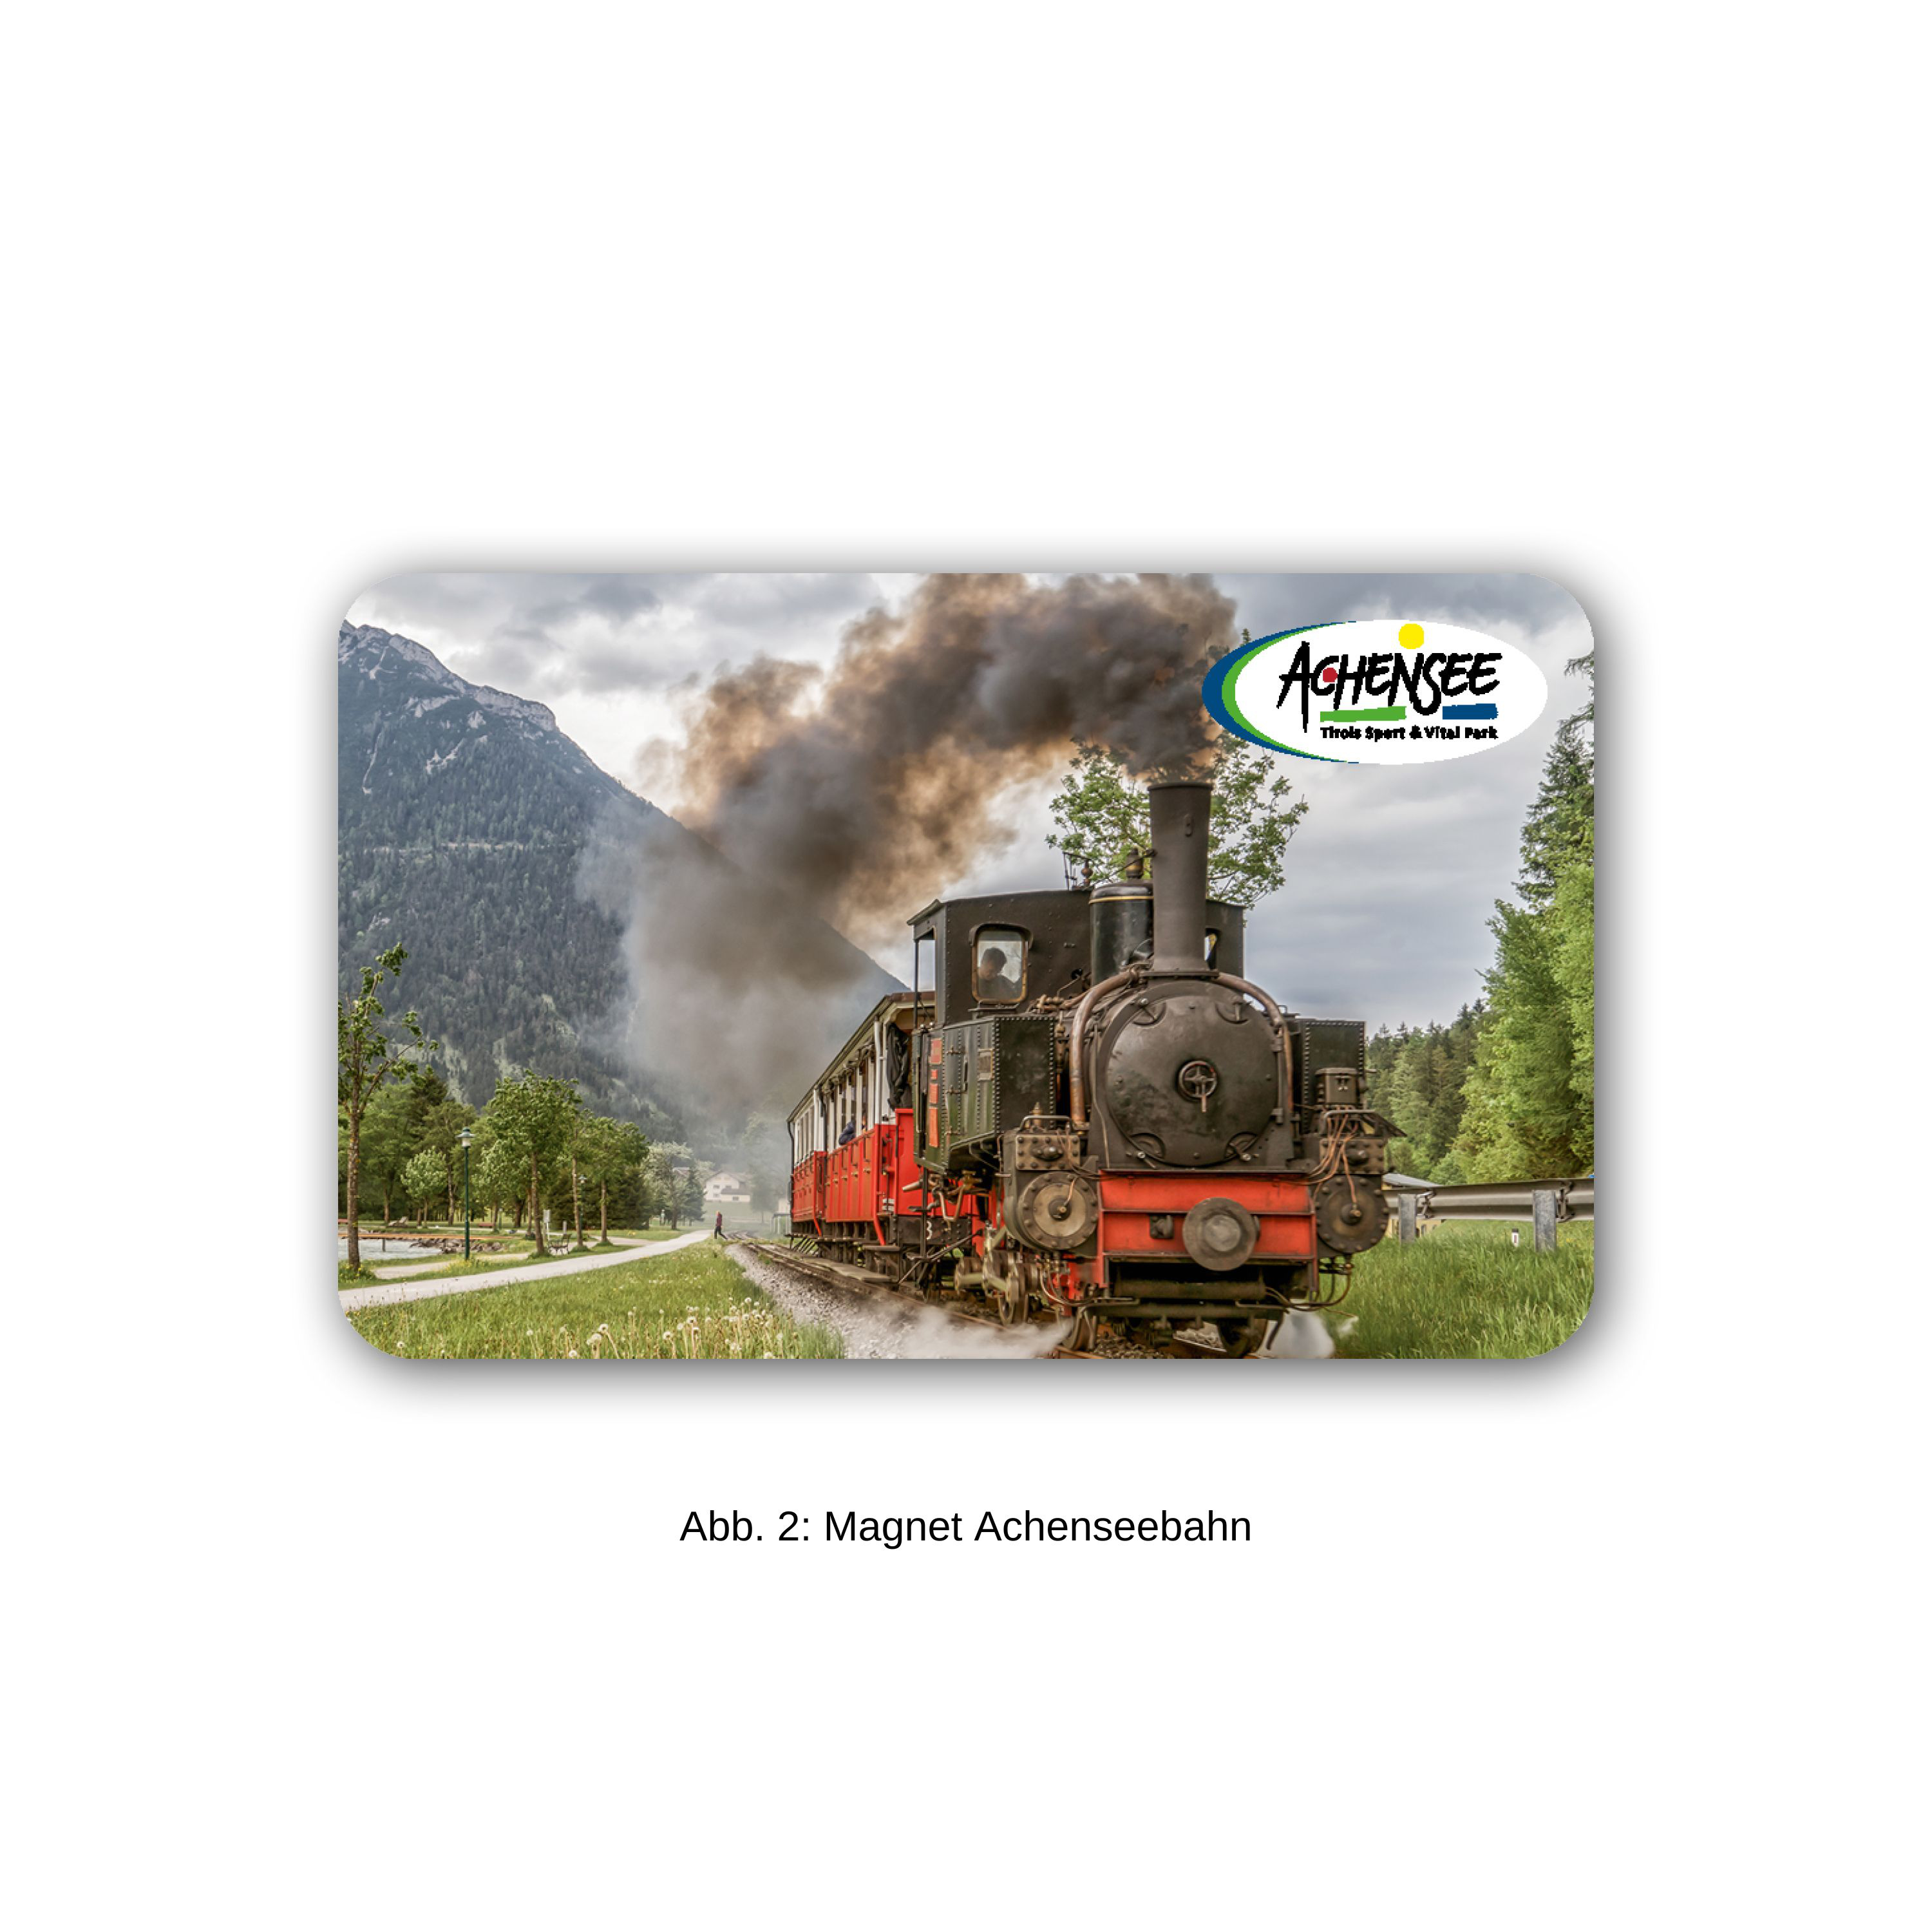 Magnet Achenseebahn